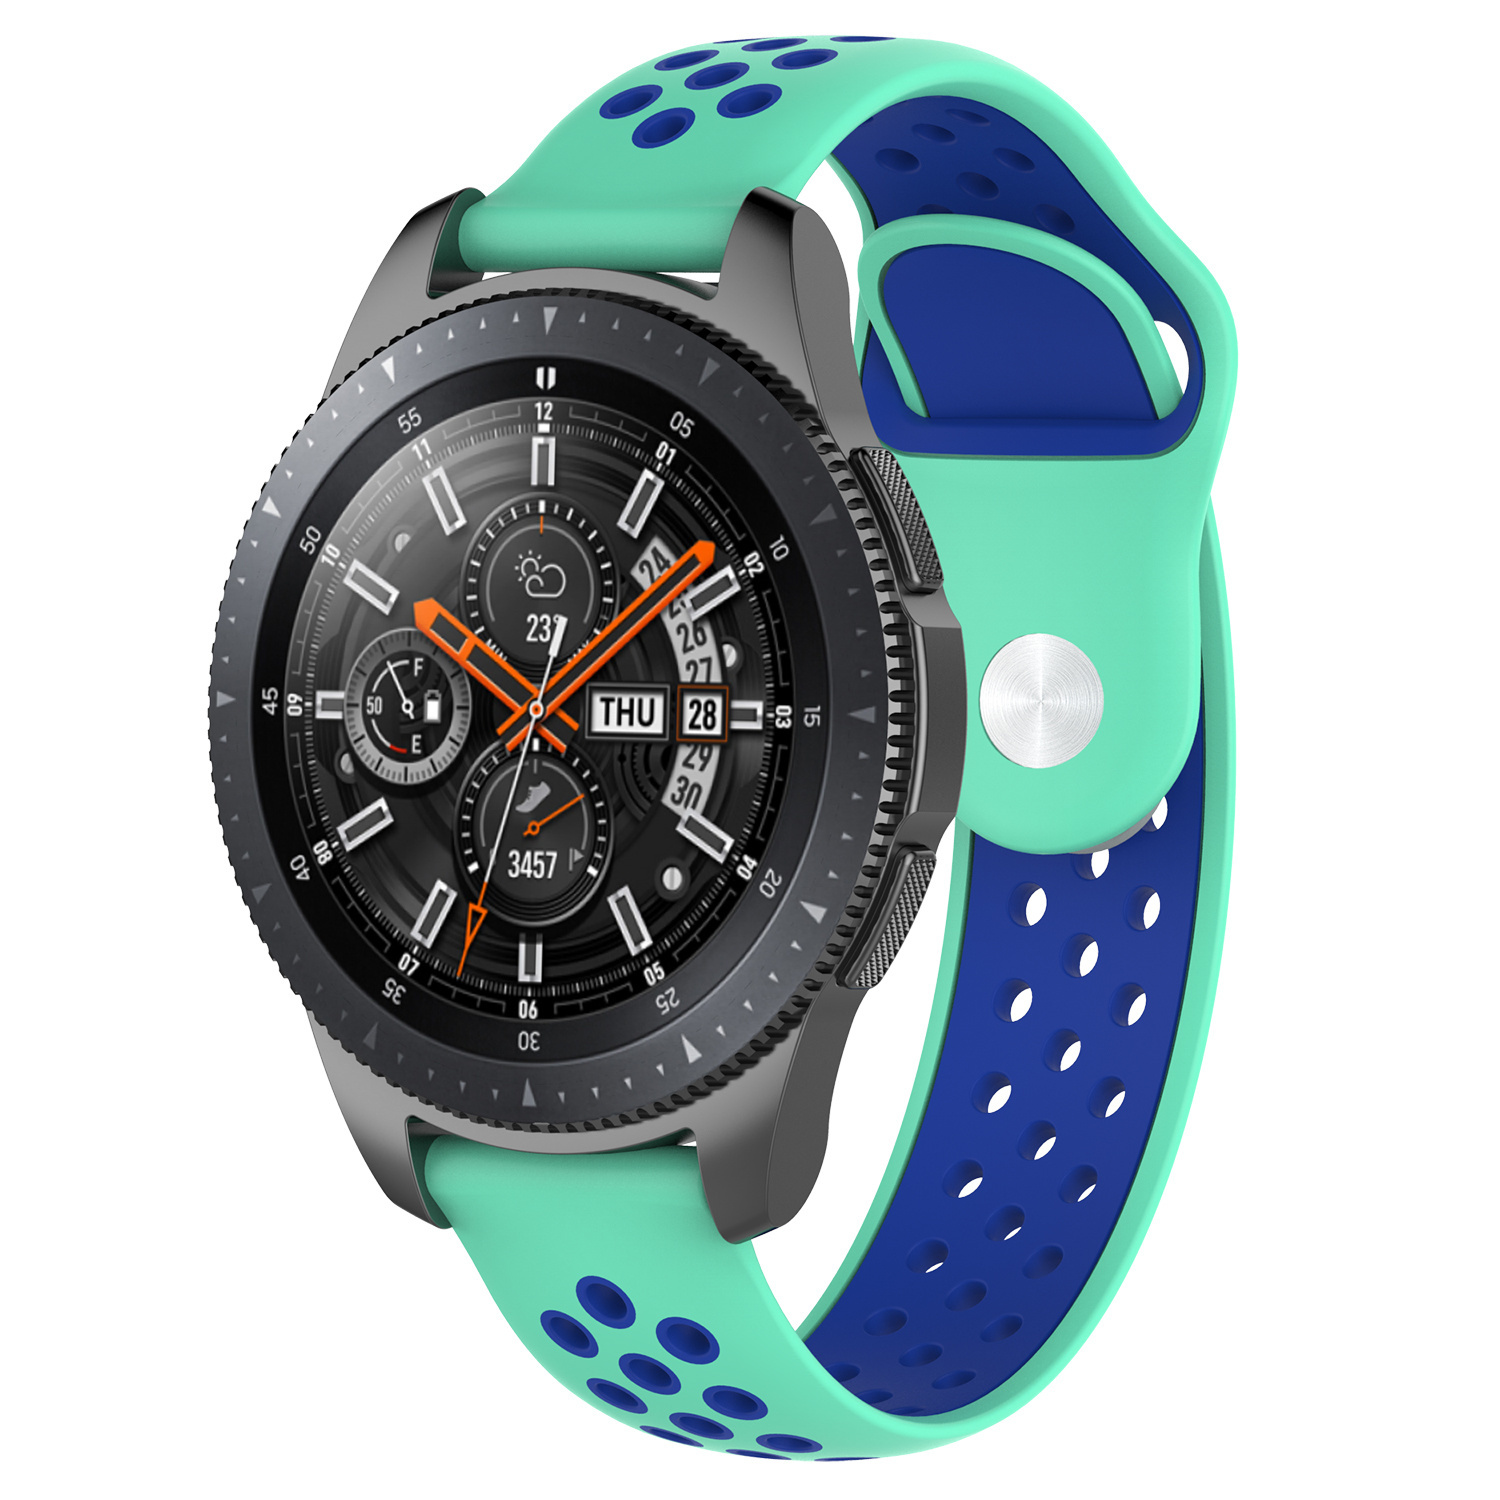 Correa deportiva doble para el Huawei Watch GT - azul turquesa